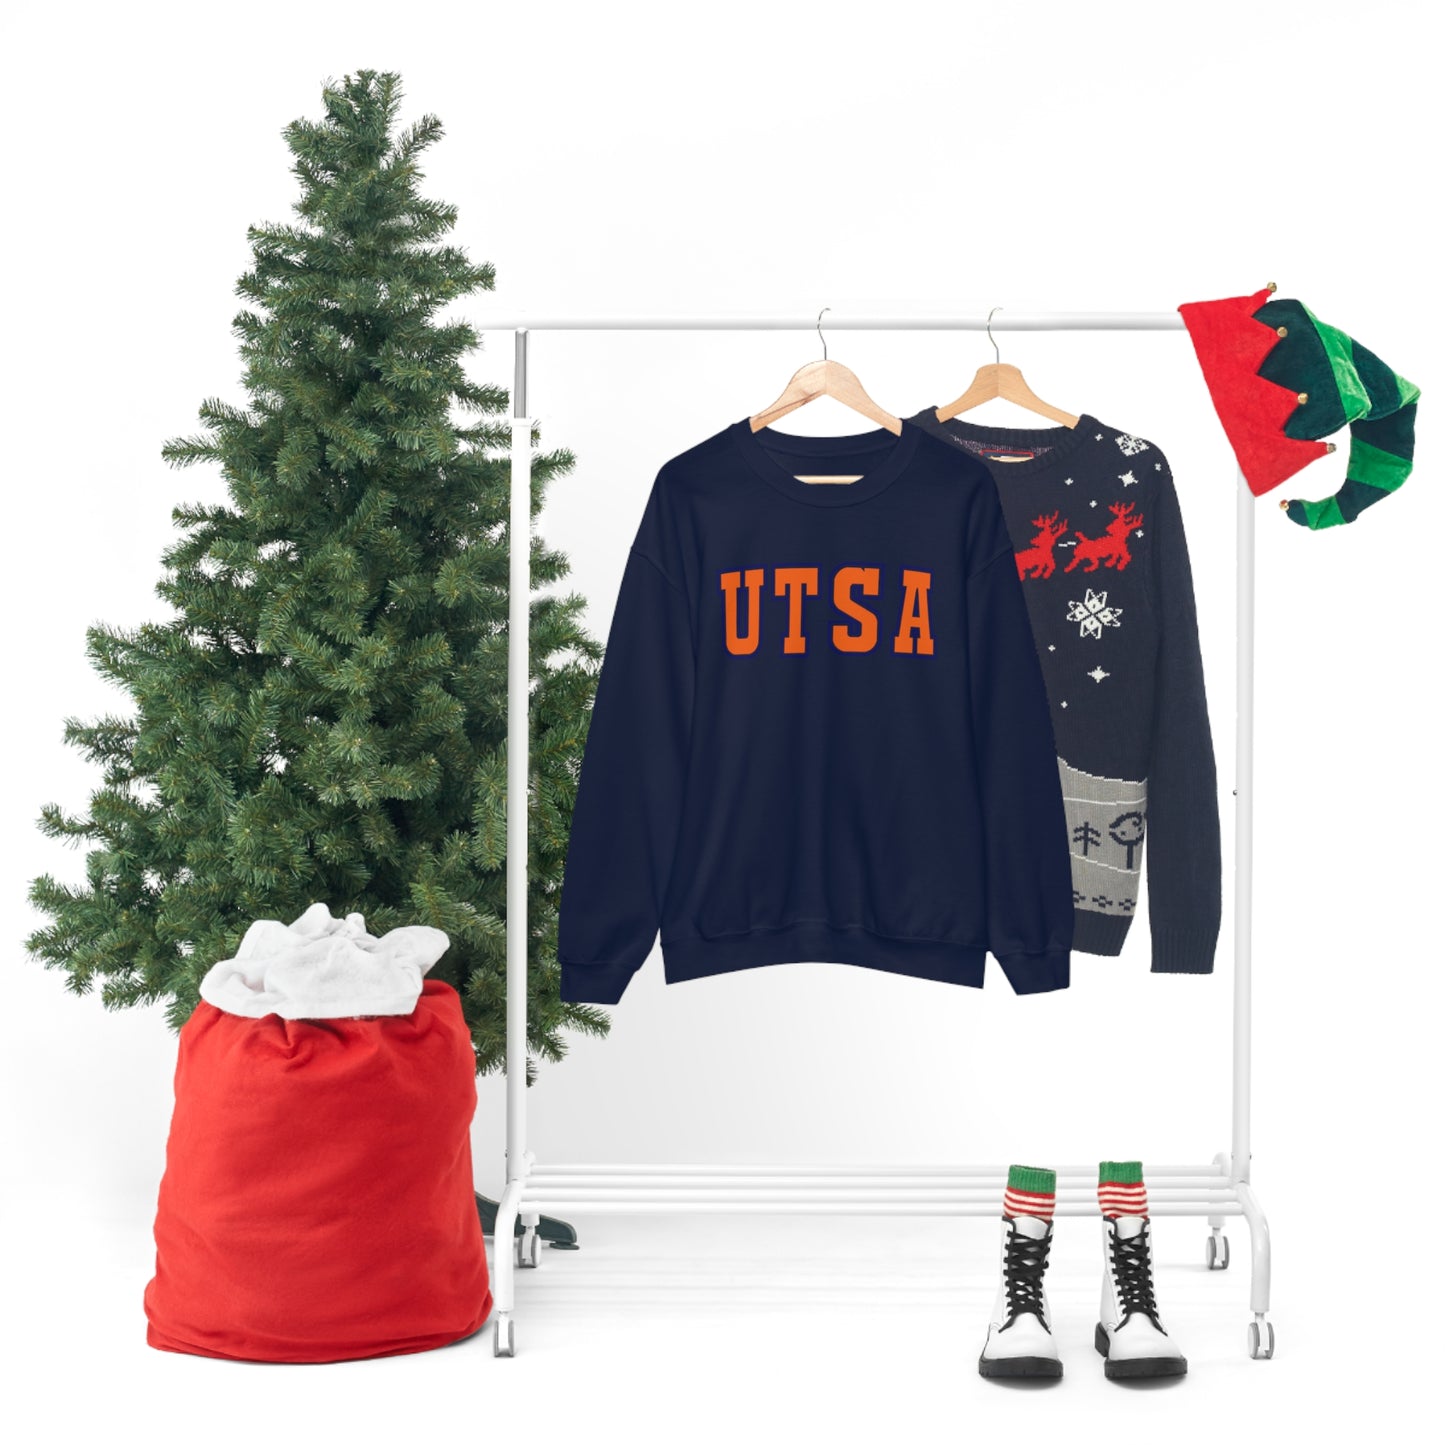 UTSA Unisex Heavy Blend Crewneck Sweatshirt